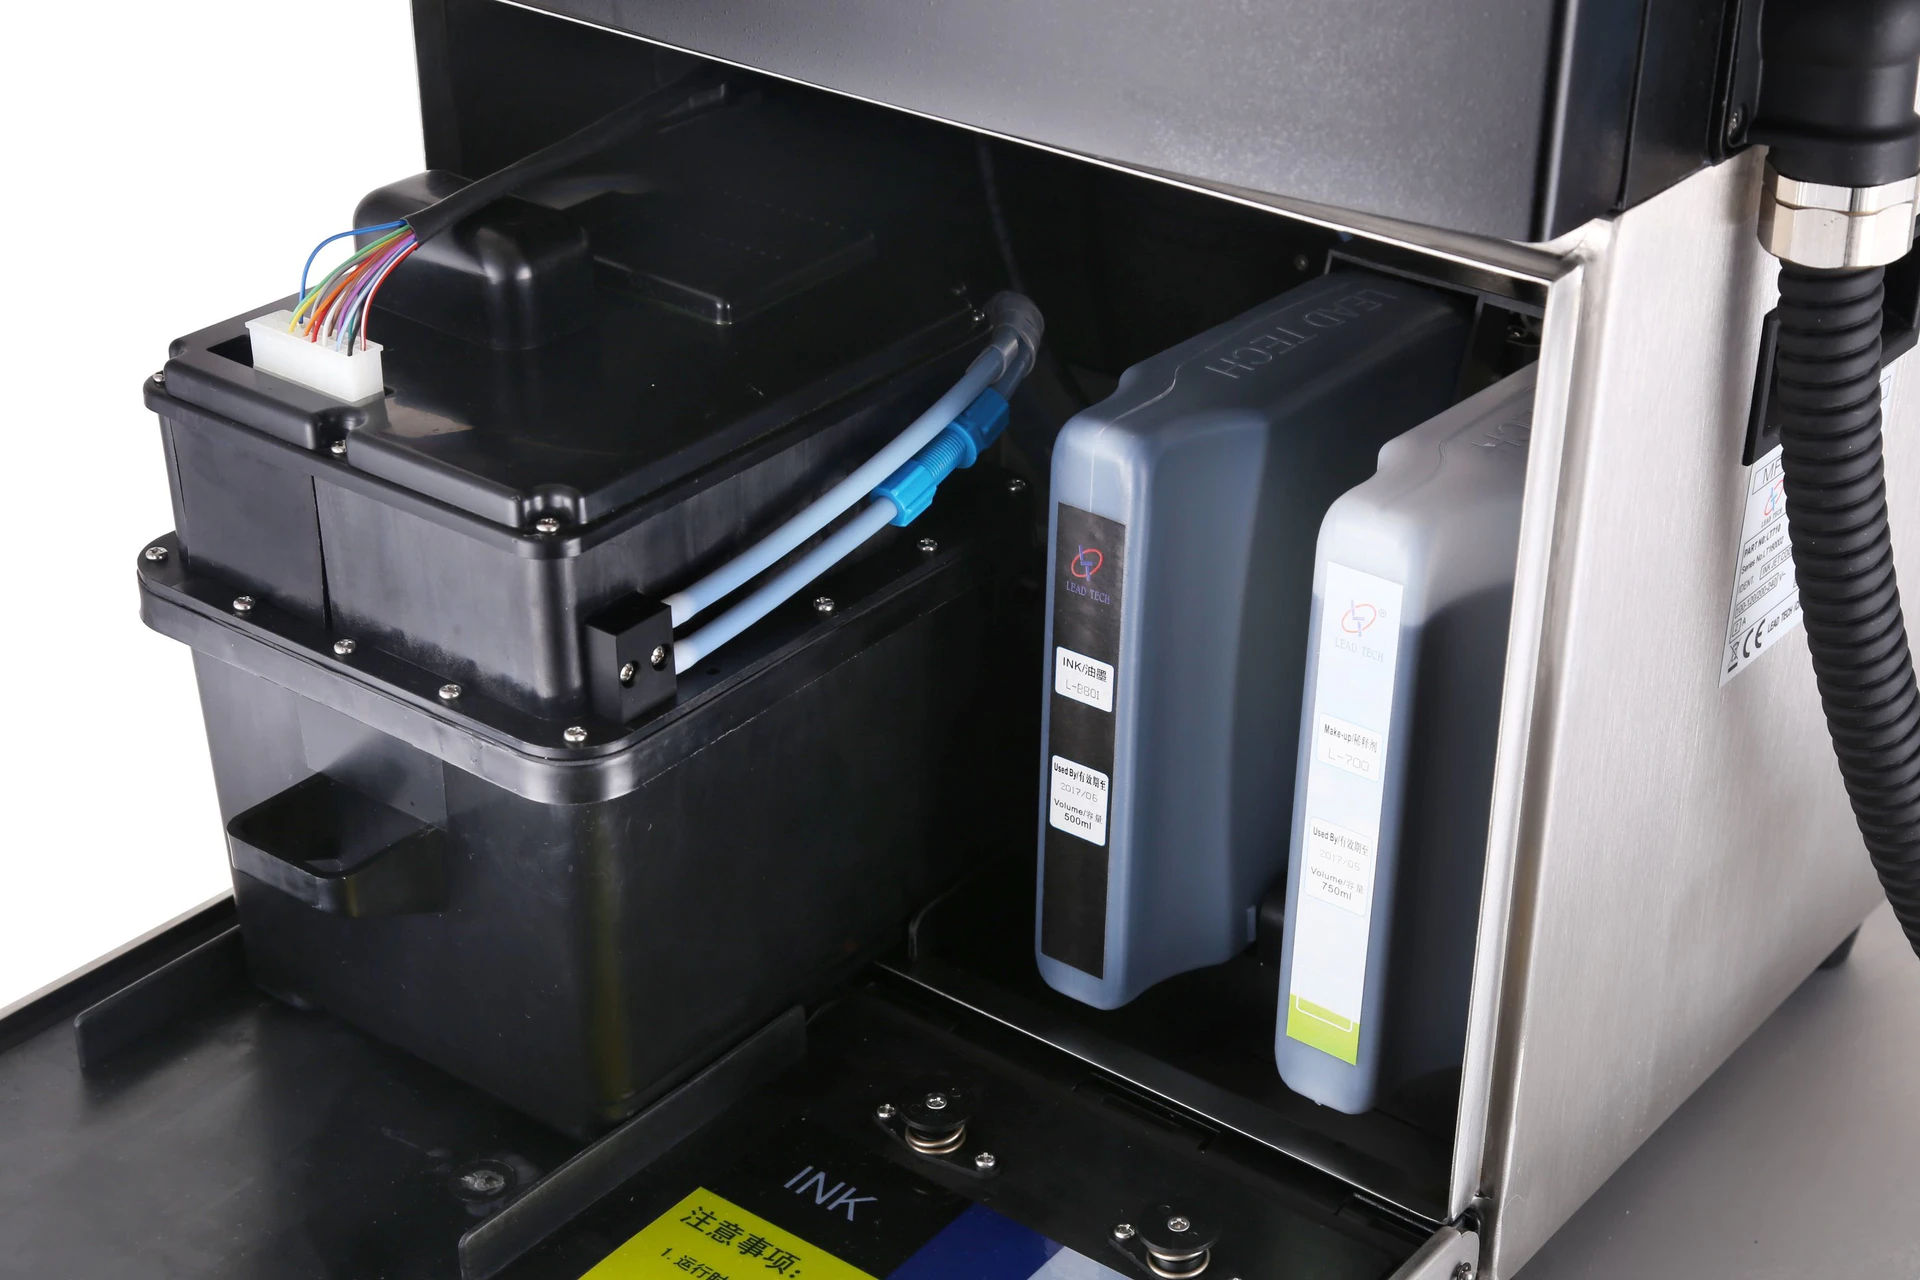 Lead Tech Lt760 Continuous Plastic film Coding Inkjet Printer